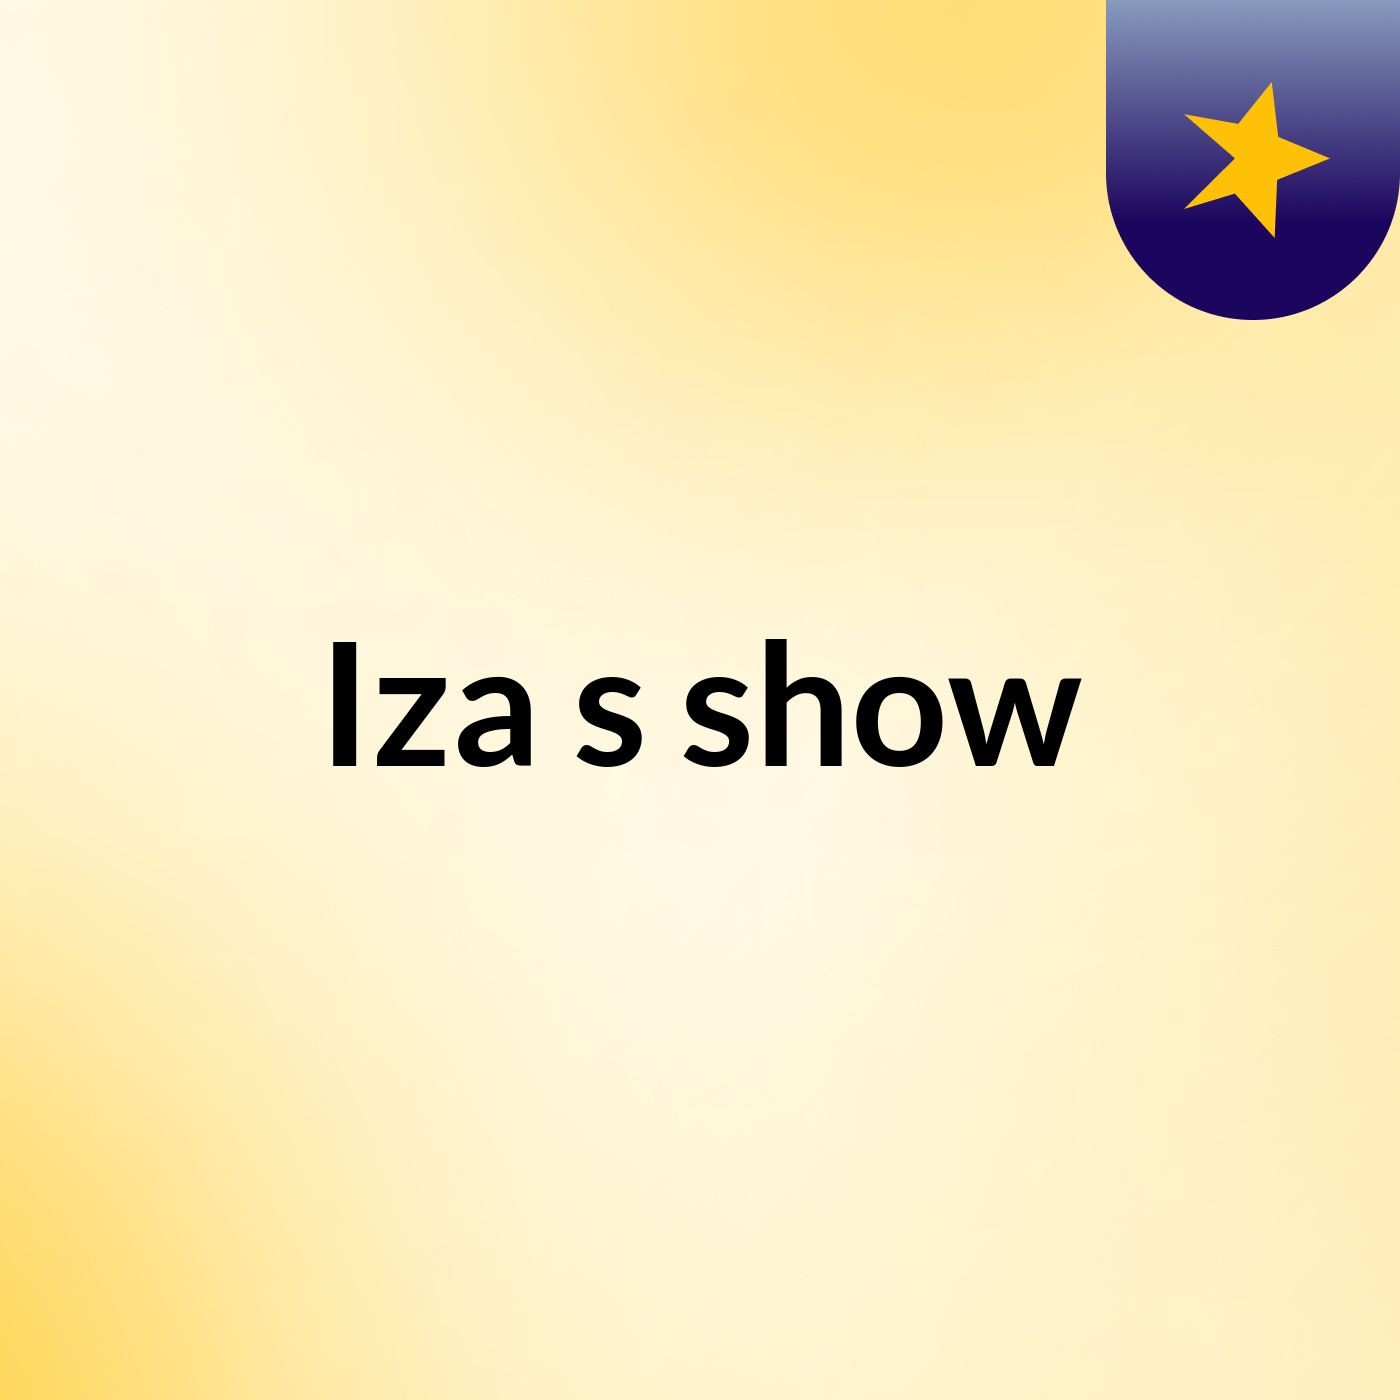 Iza's show